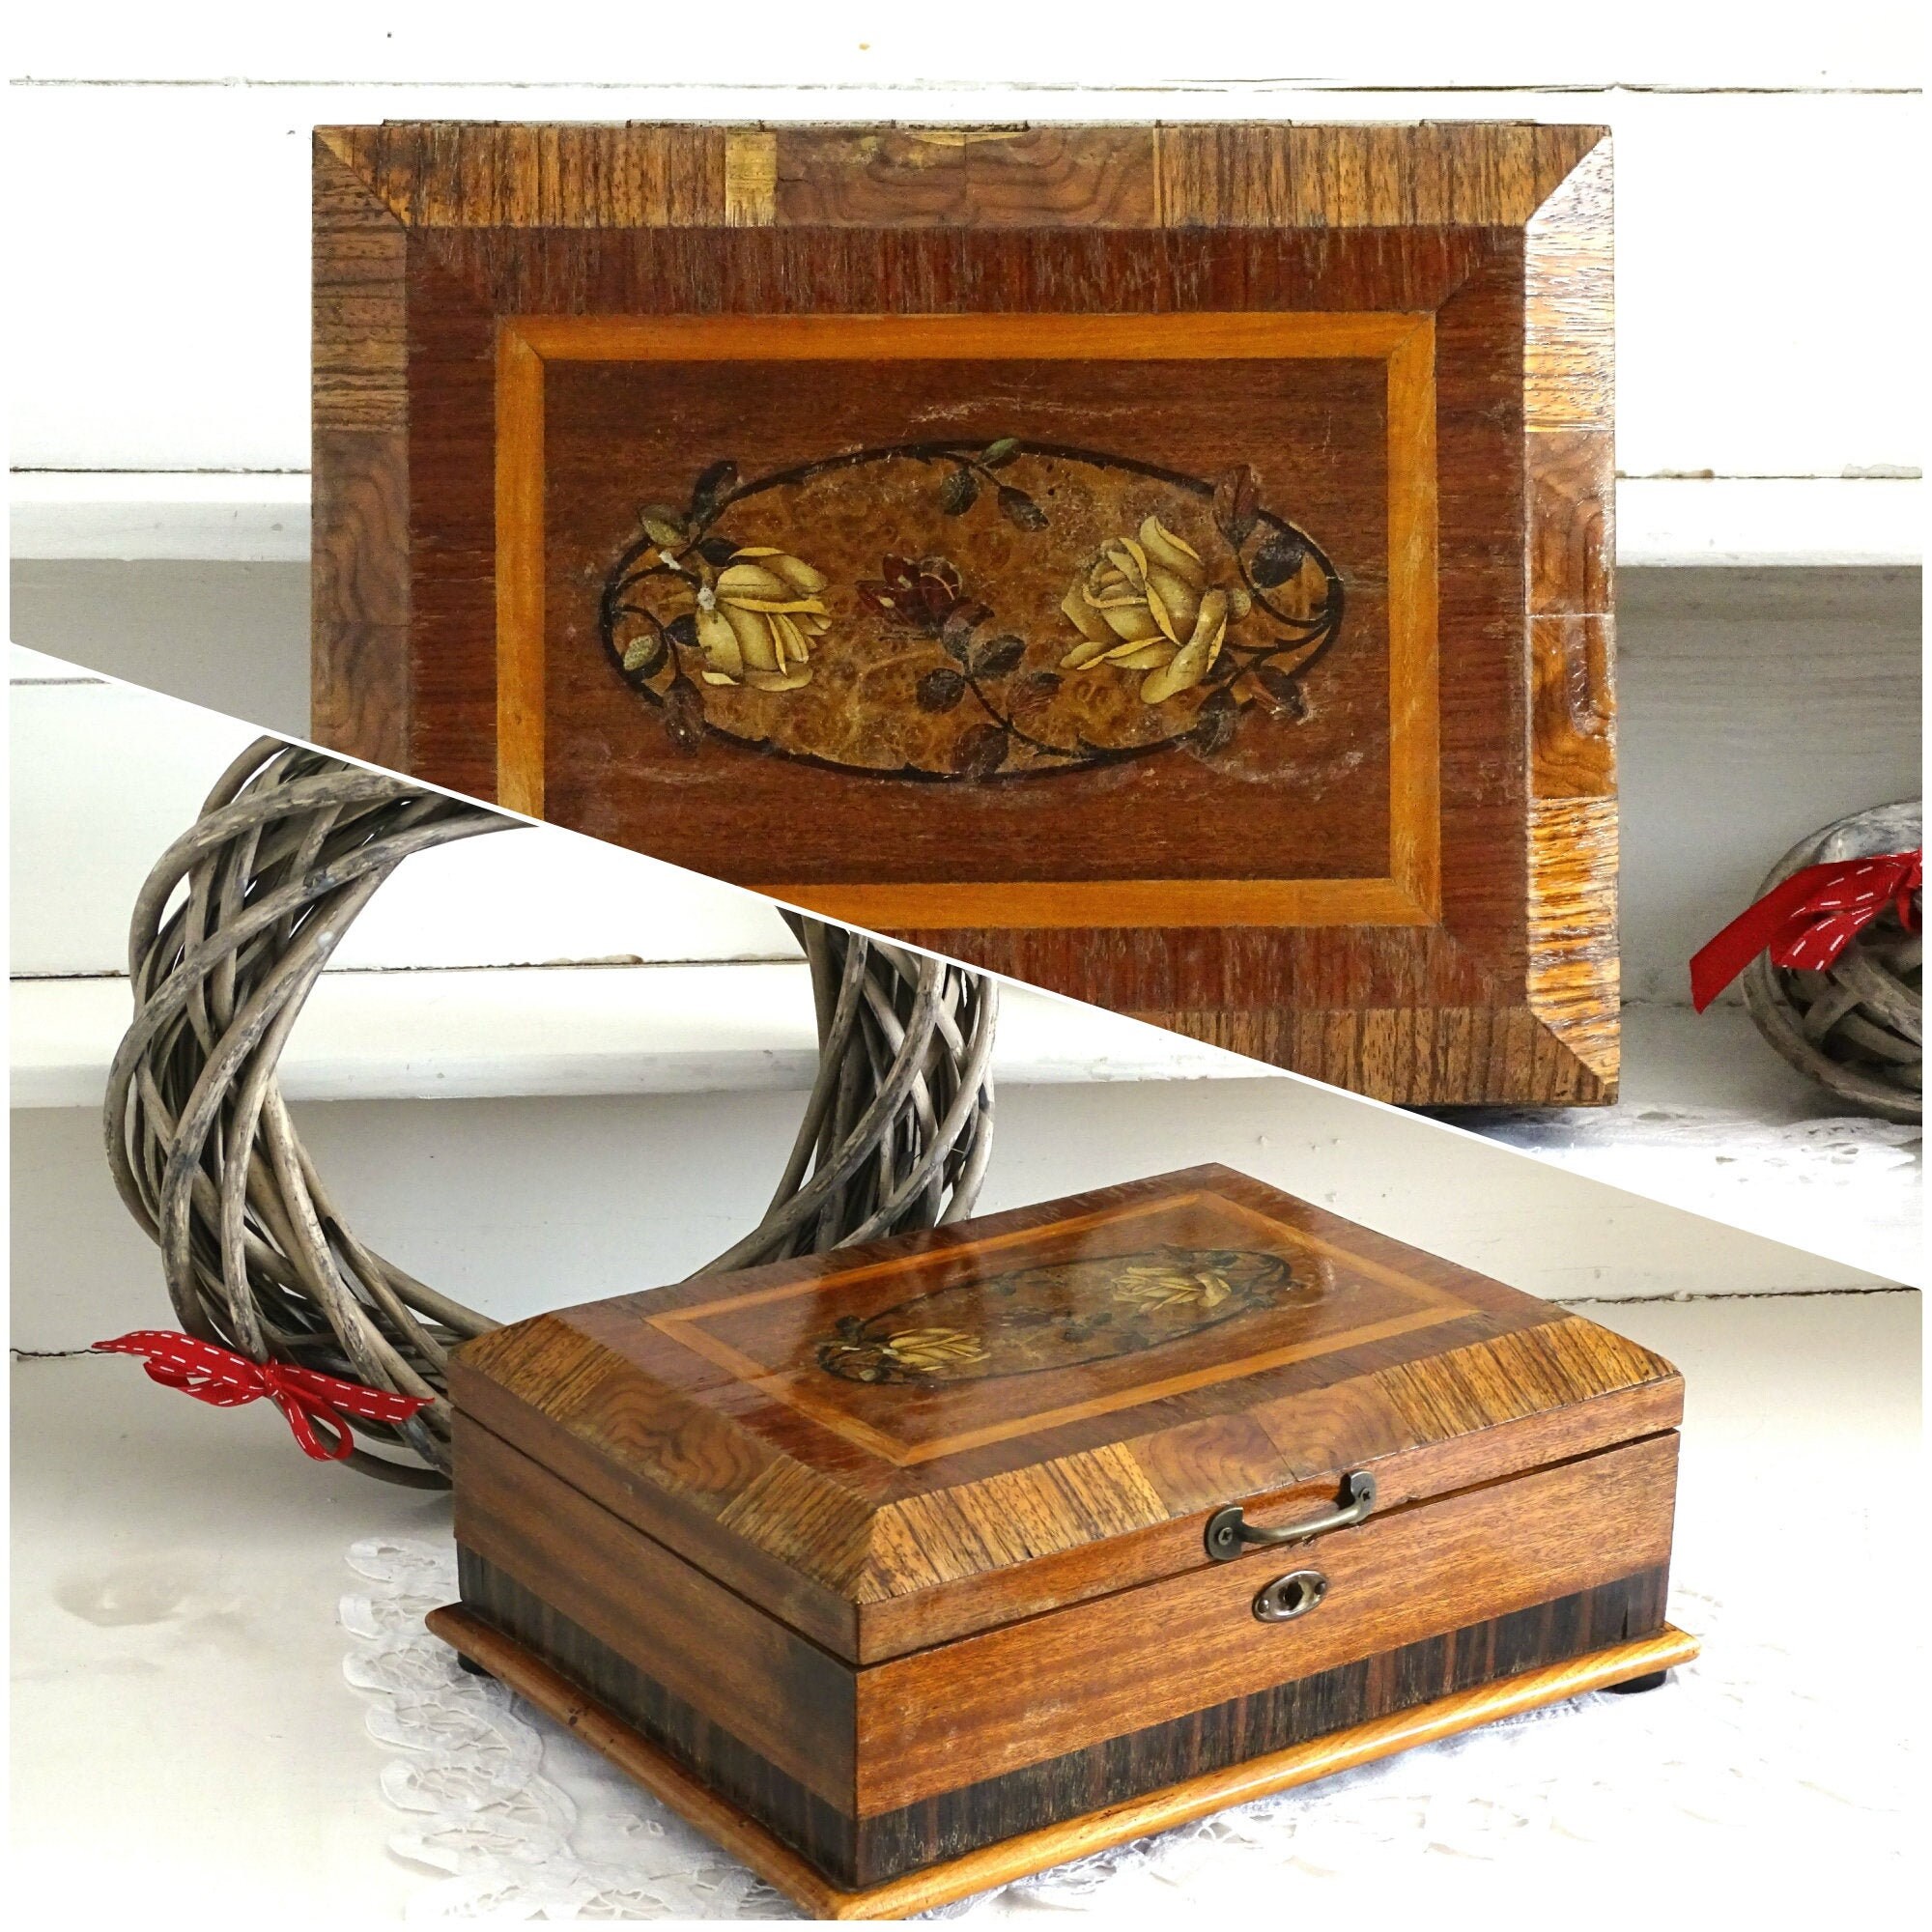 Wooden Treasure Chest Wood Box Case Jewellery Keepsake Trinket Storage Chic Gift